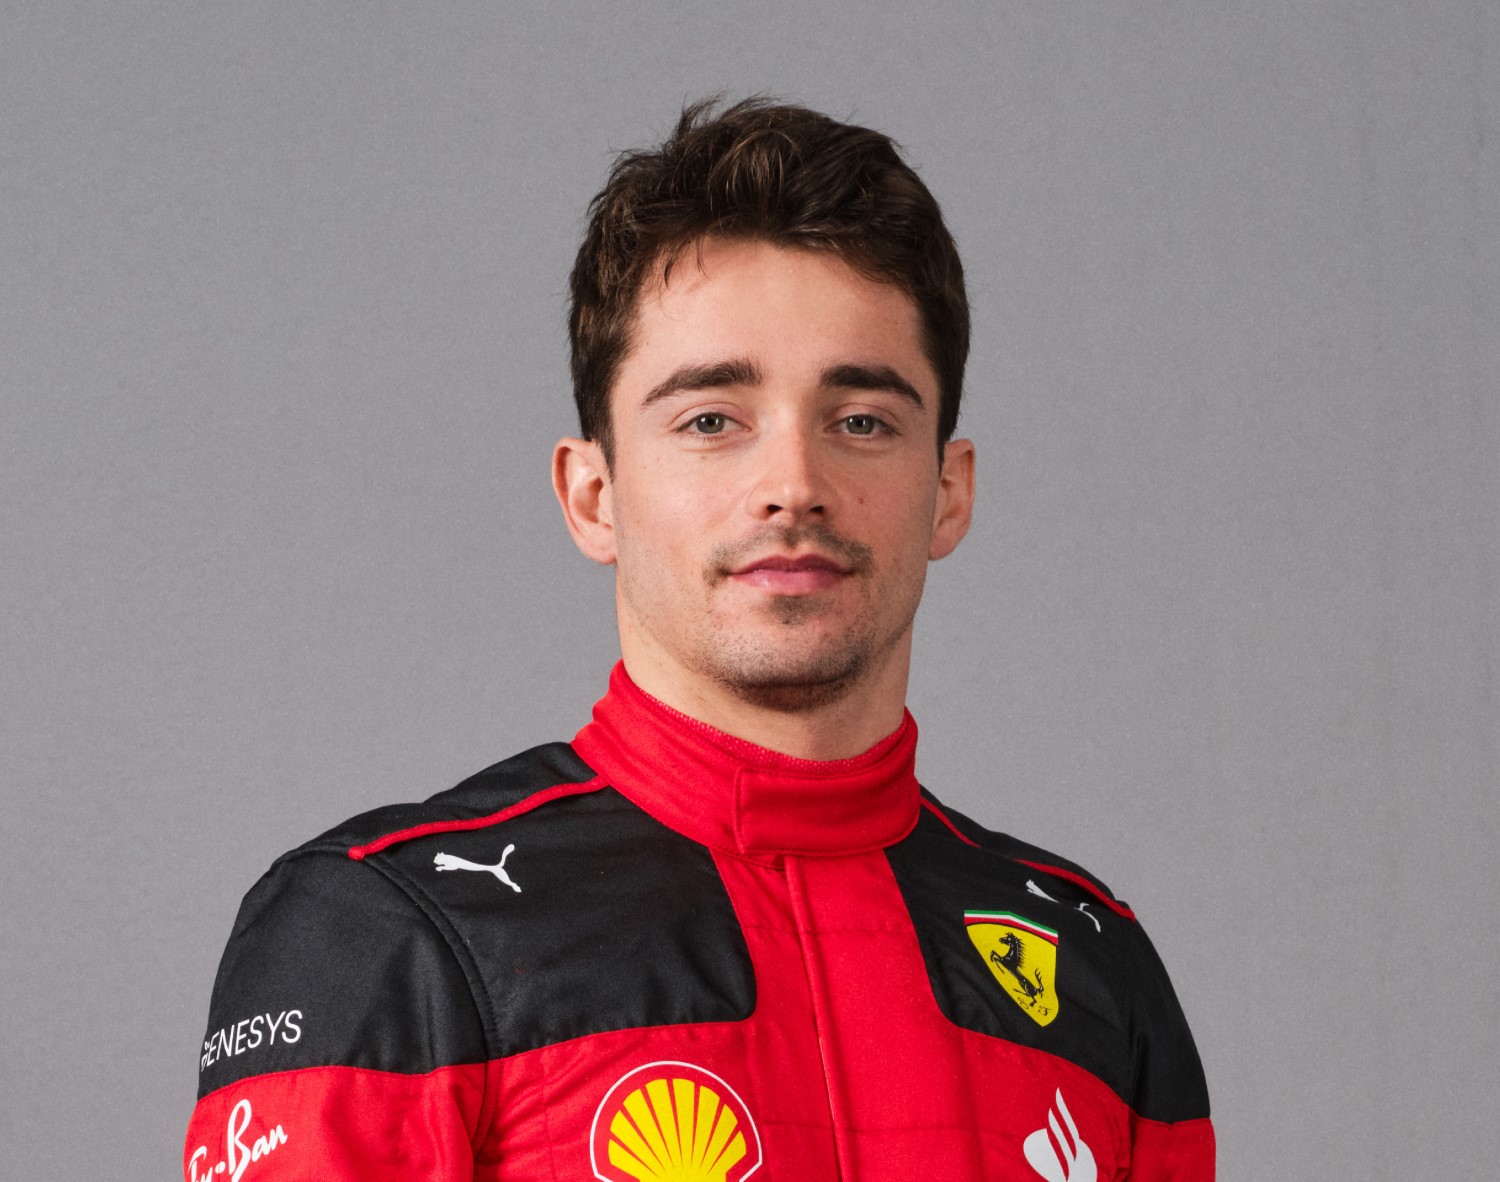 Charles Leclerc, driver of the #16 Ferrari